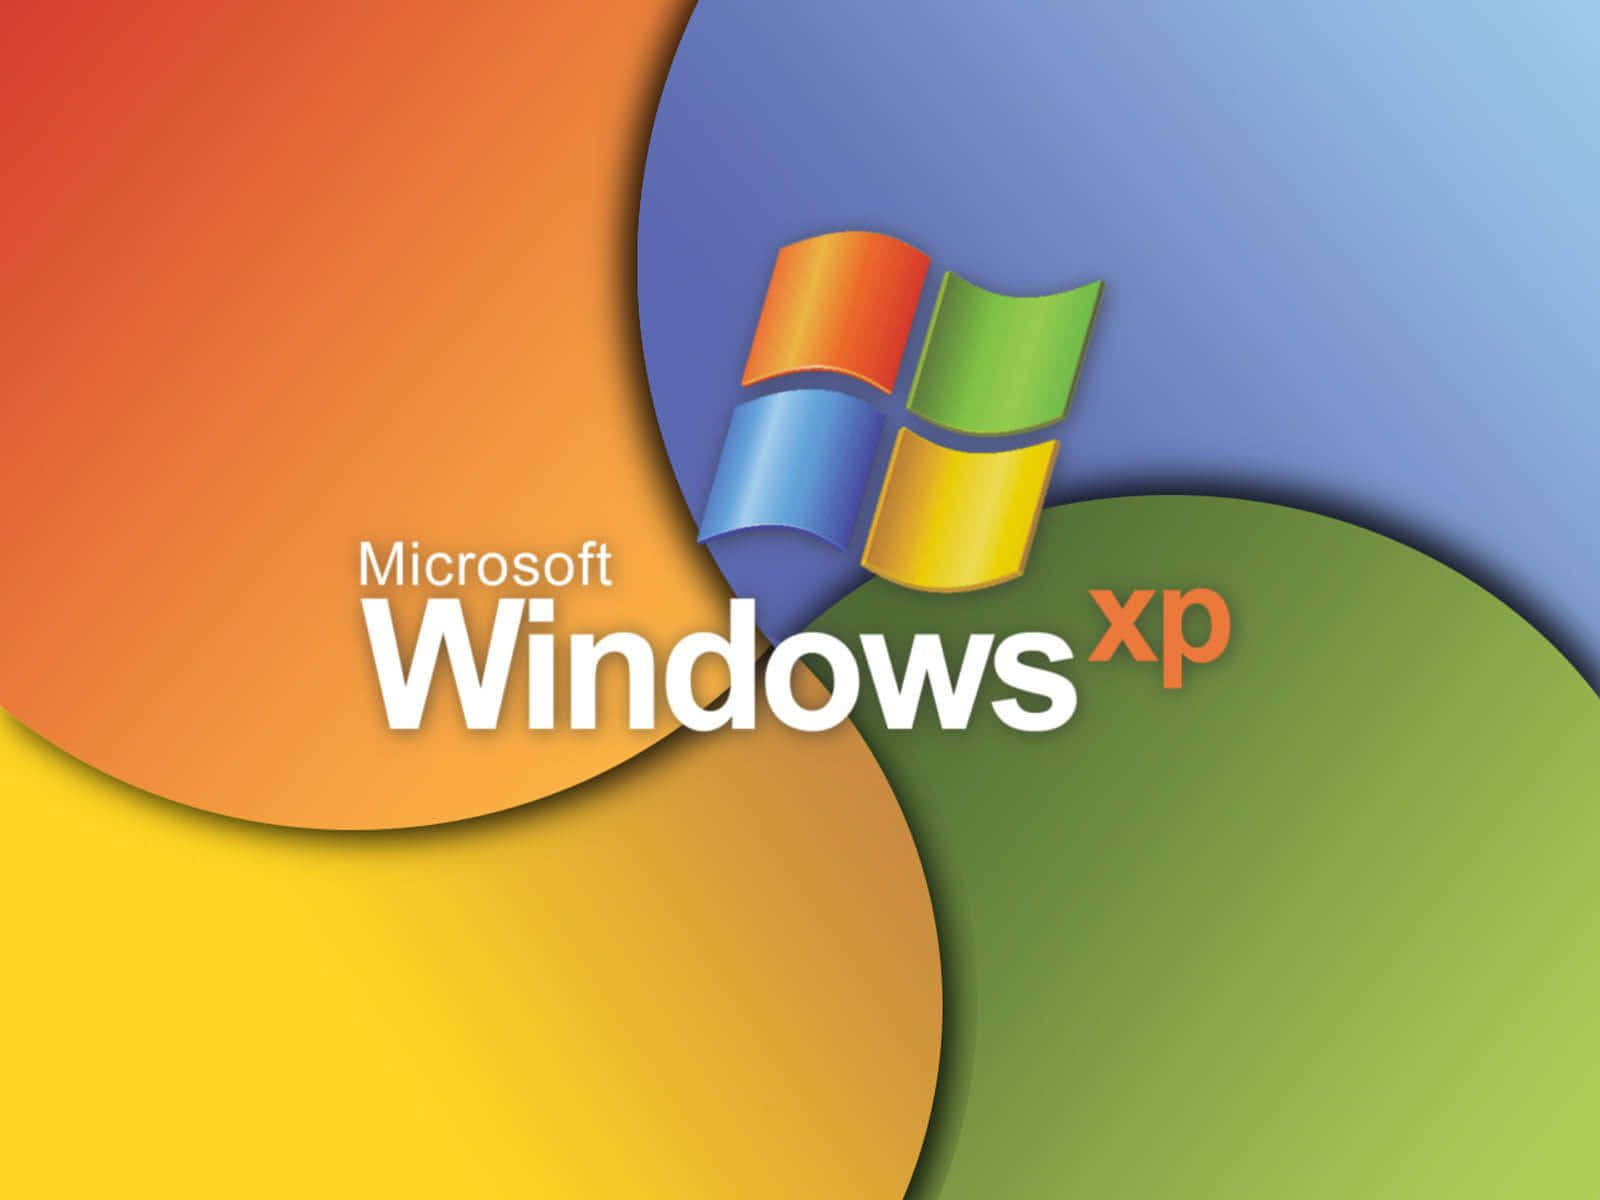 Mantenteconectado Con Tu Mundo Utilizando Windows Xp.